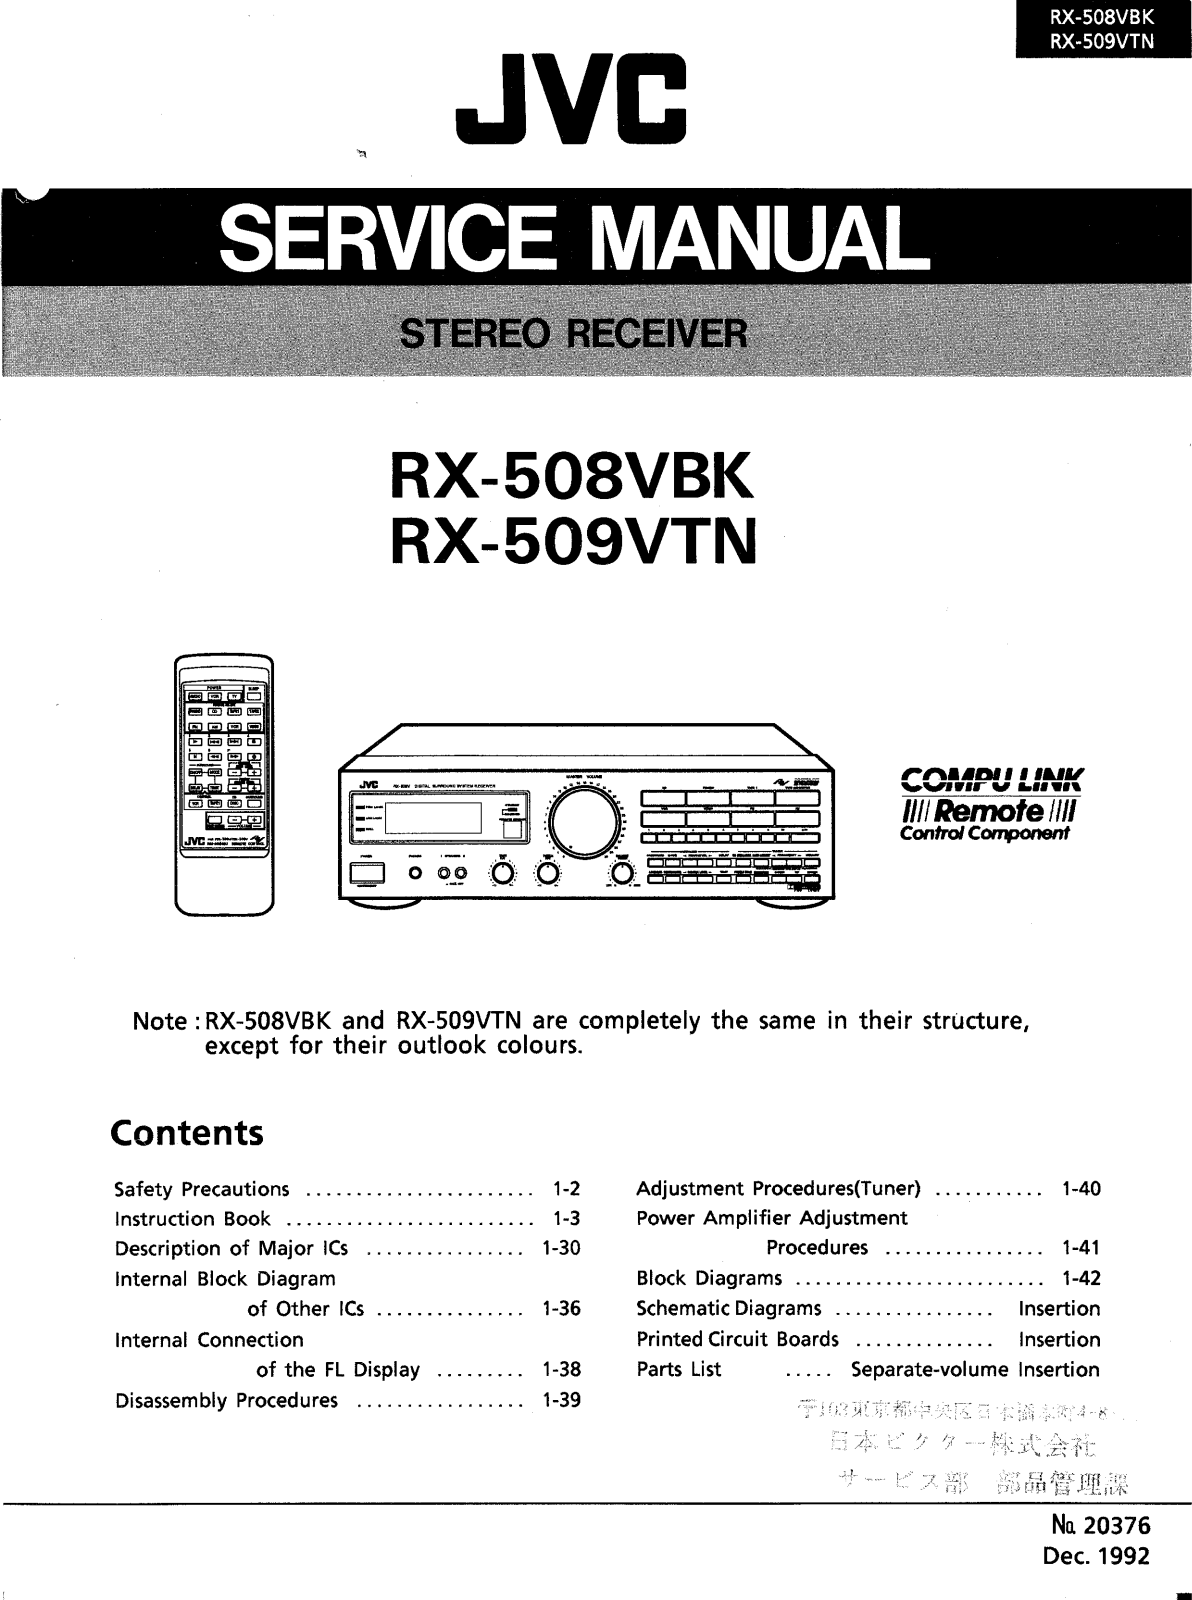 JVC RX-508-VBK, RX-509-VTN Service manual